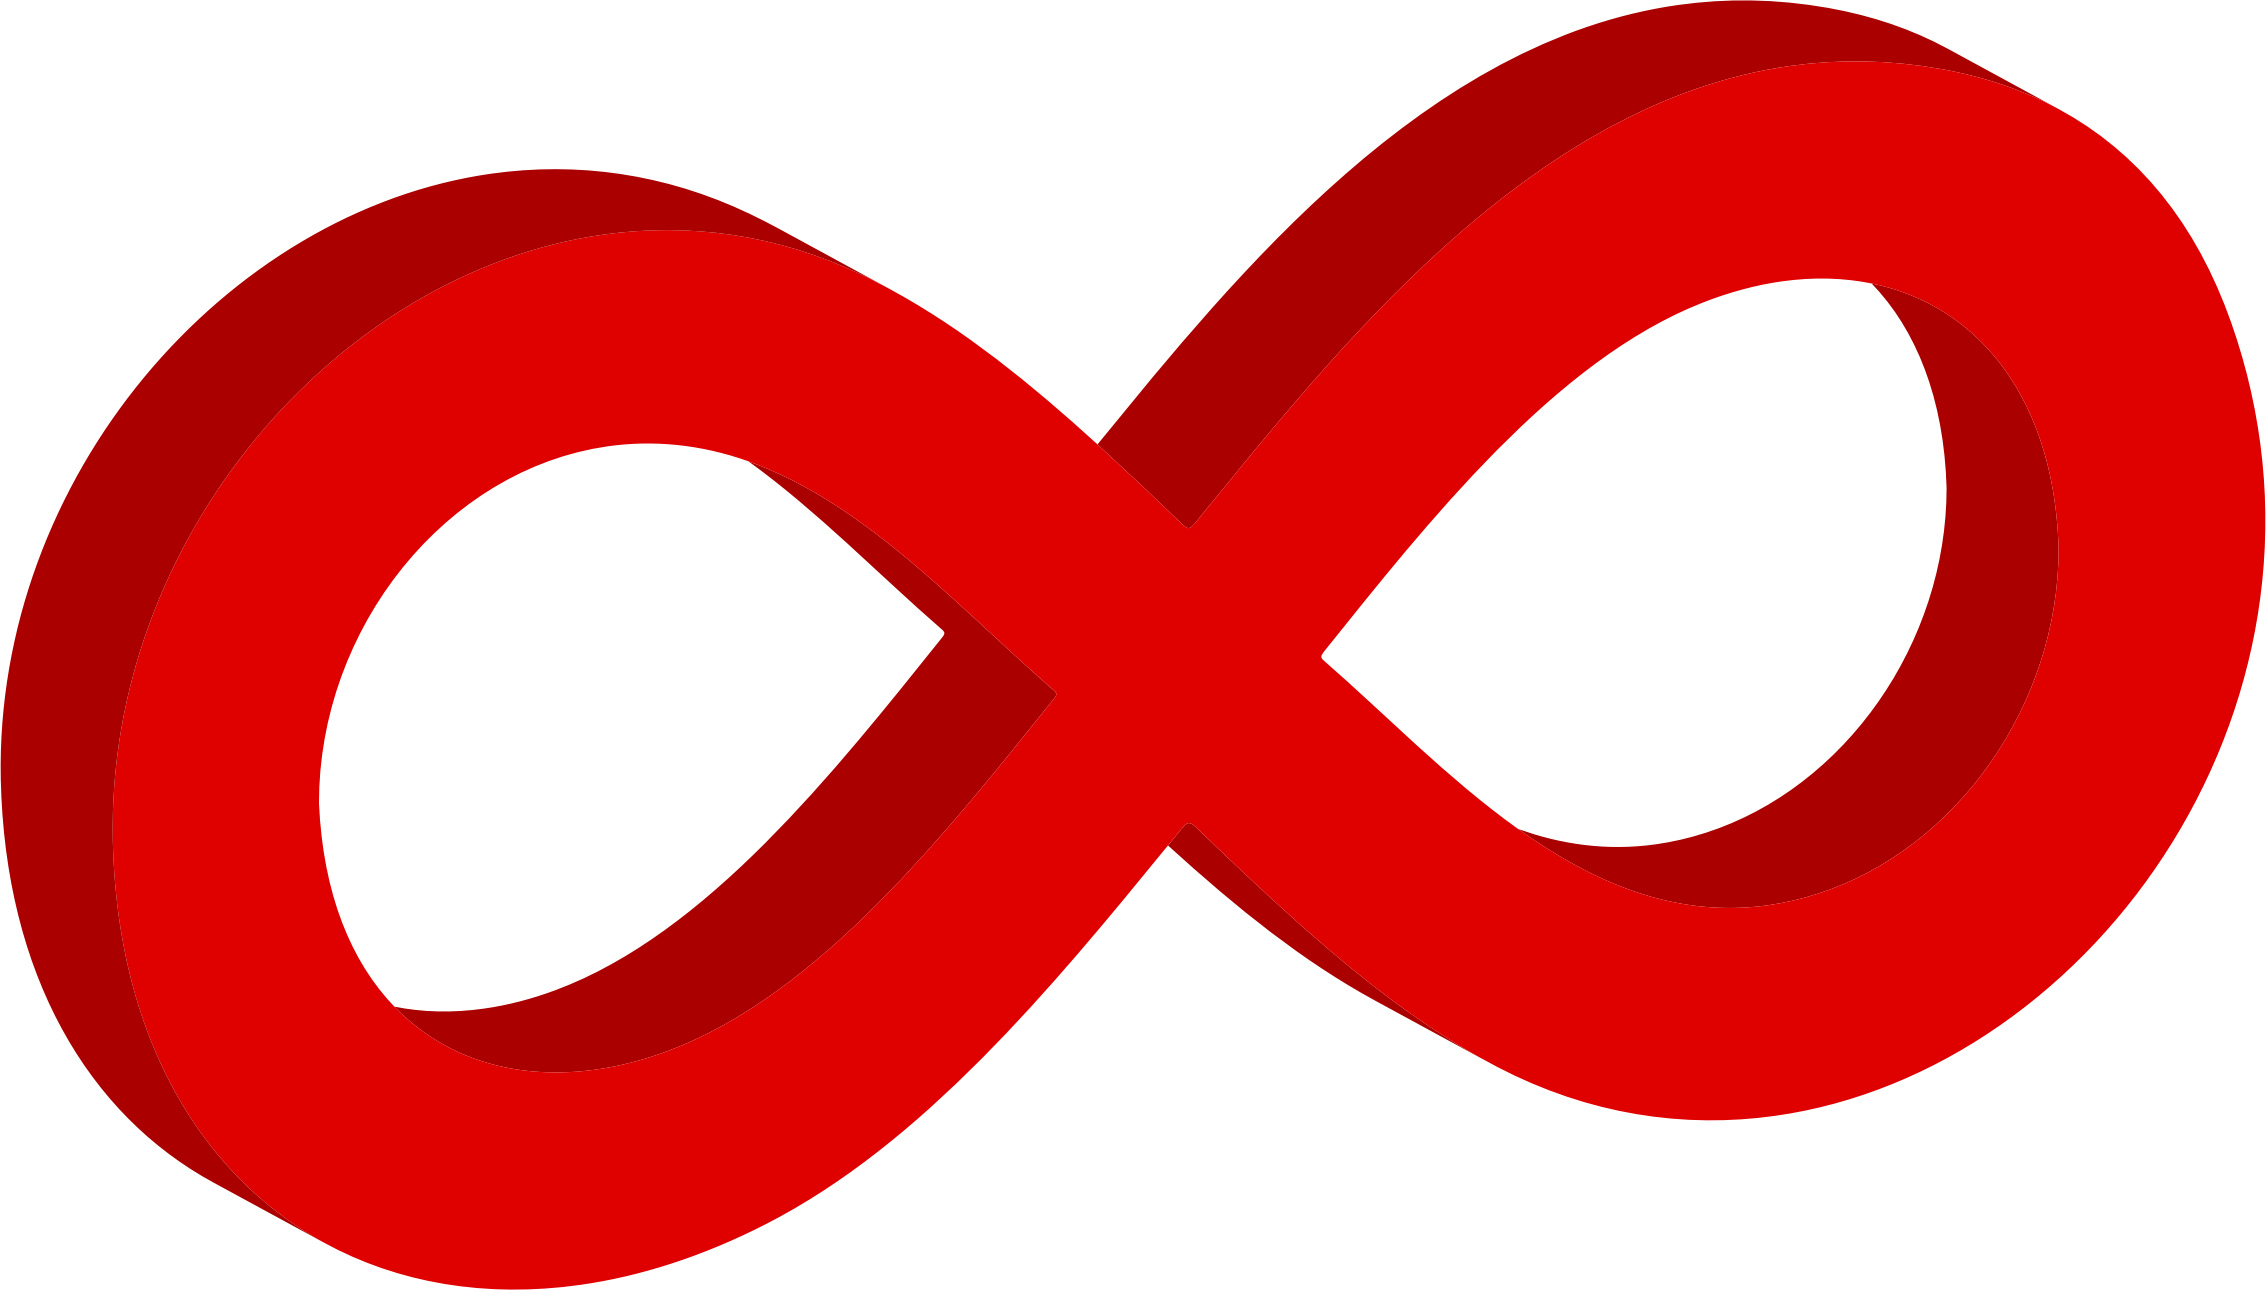 Infinity clipart infinity sign. D symbol big image